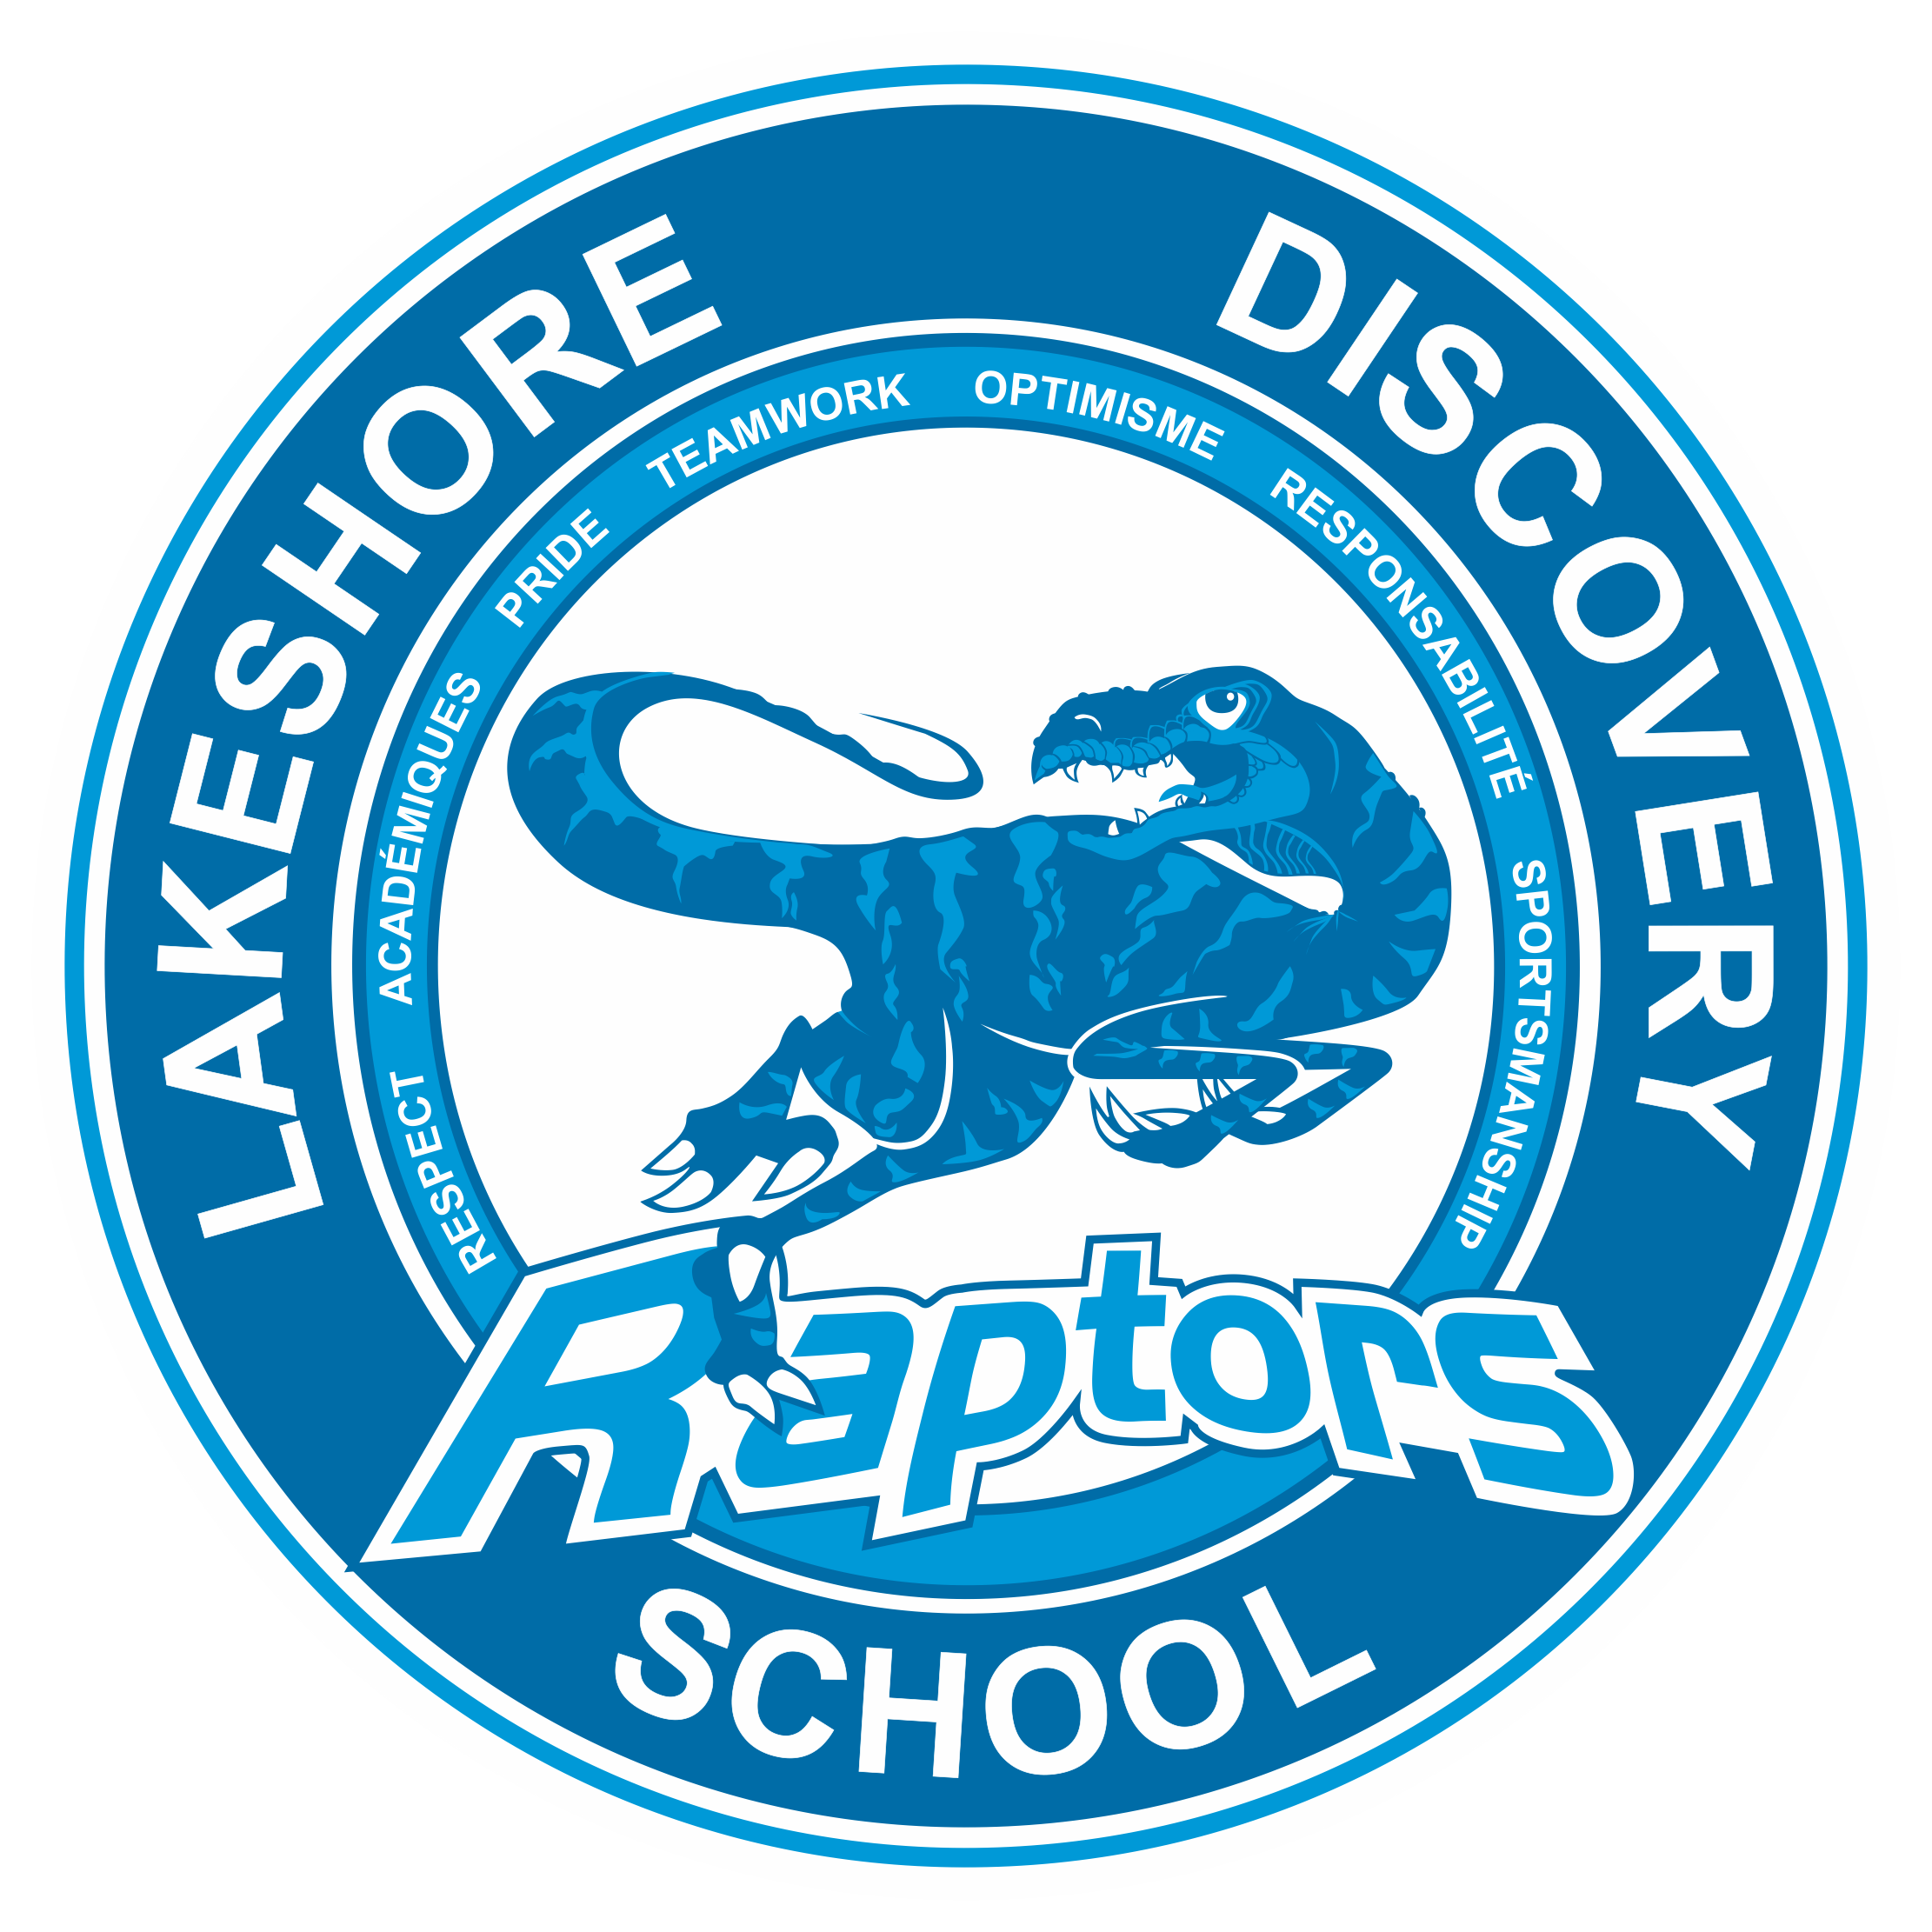 Lakeshore Discovery School Logo